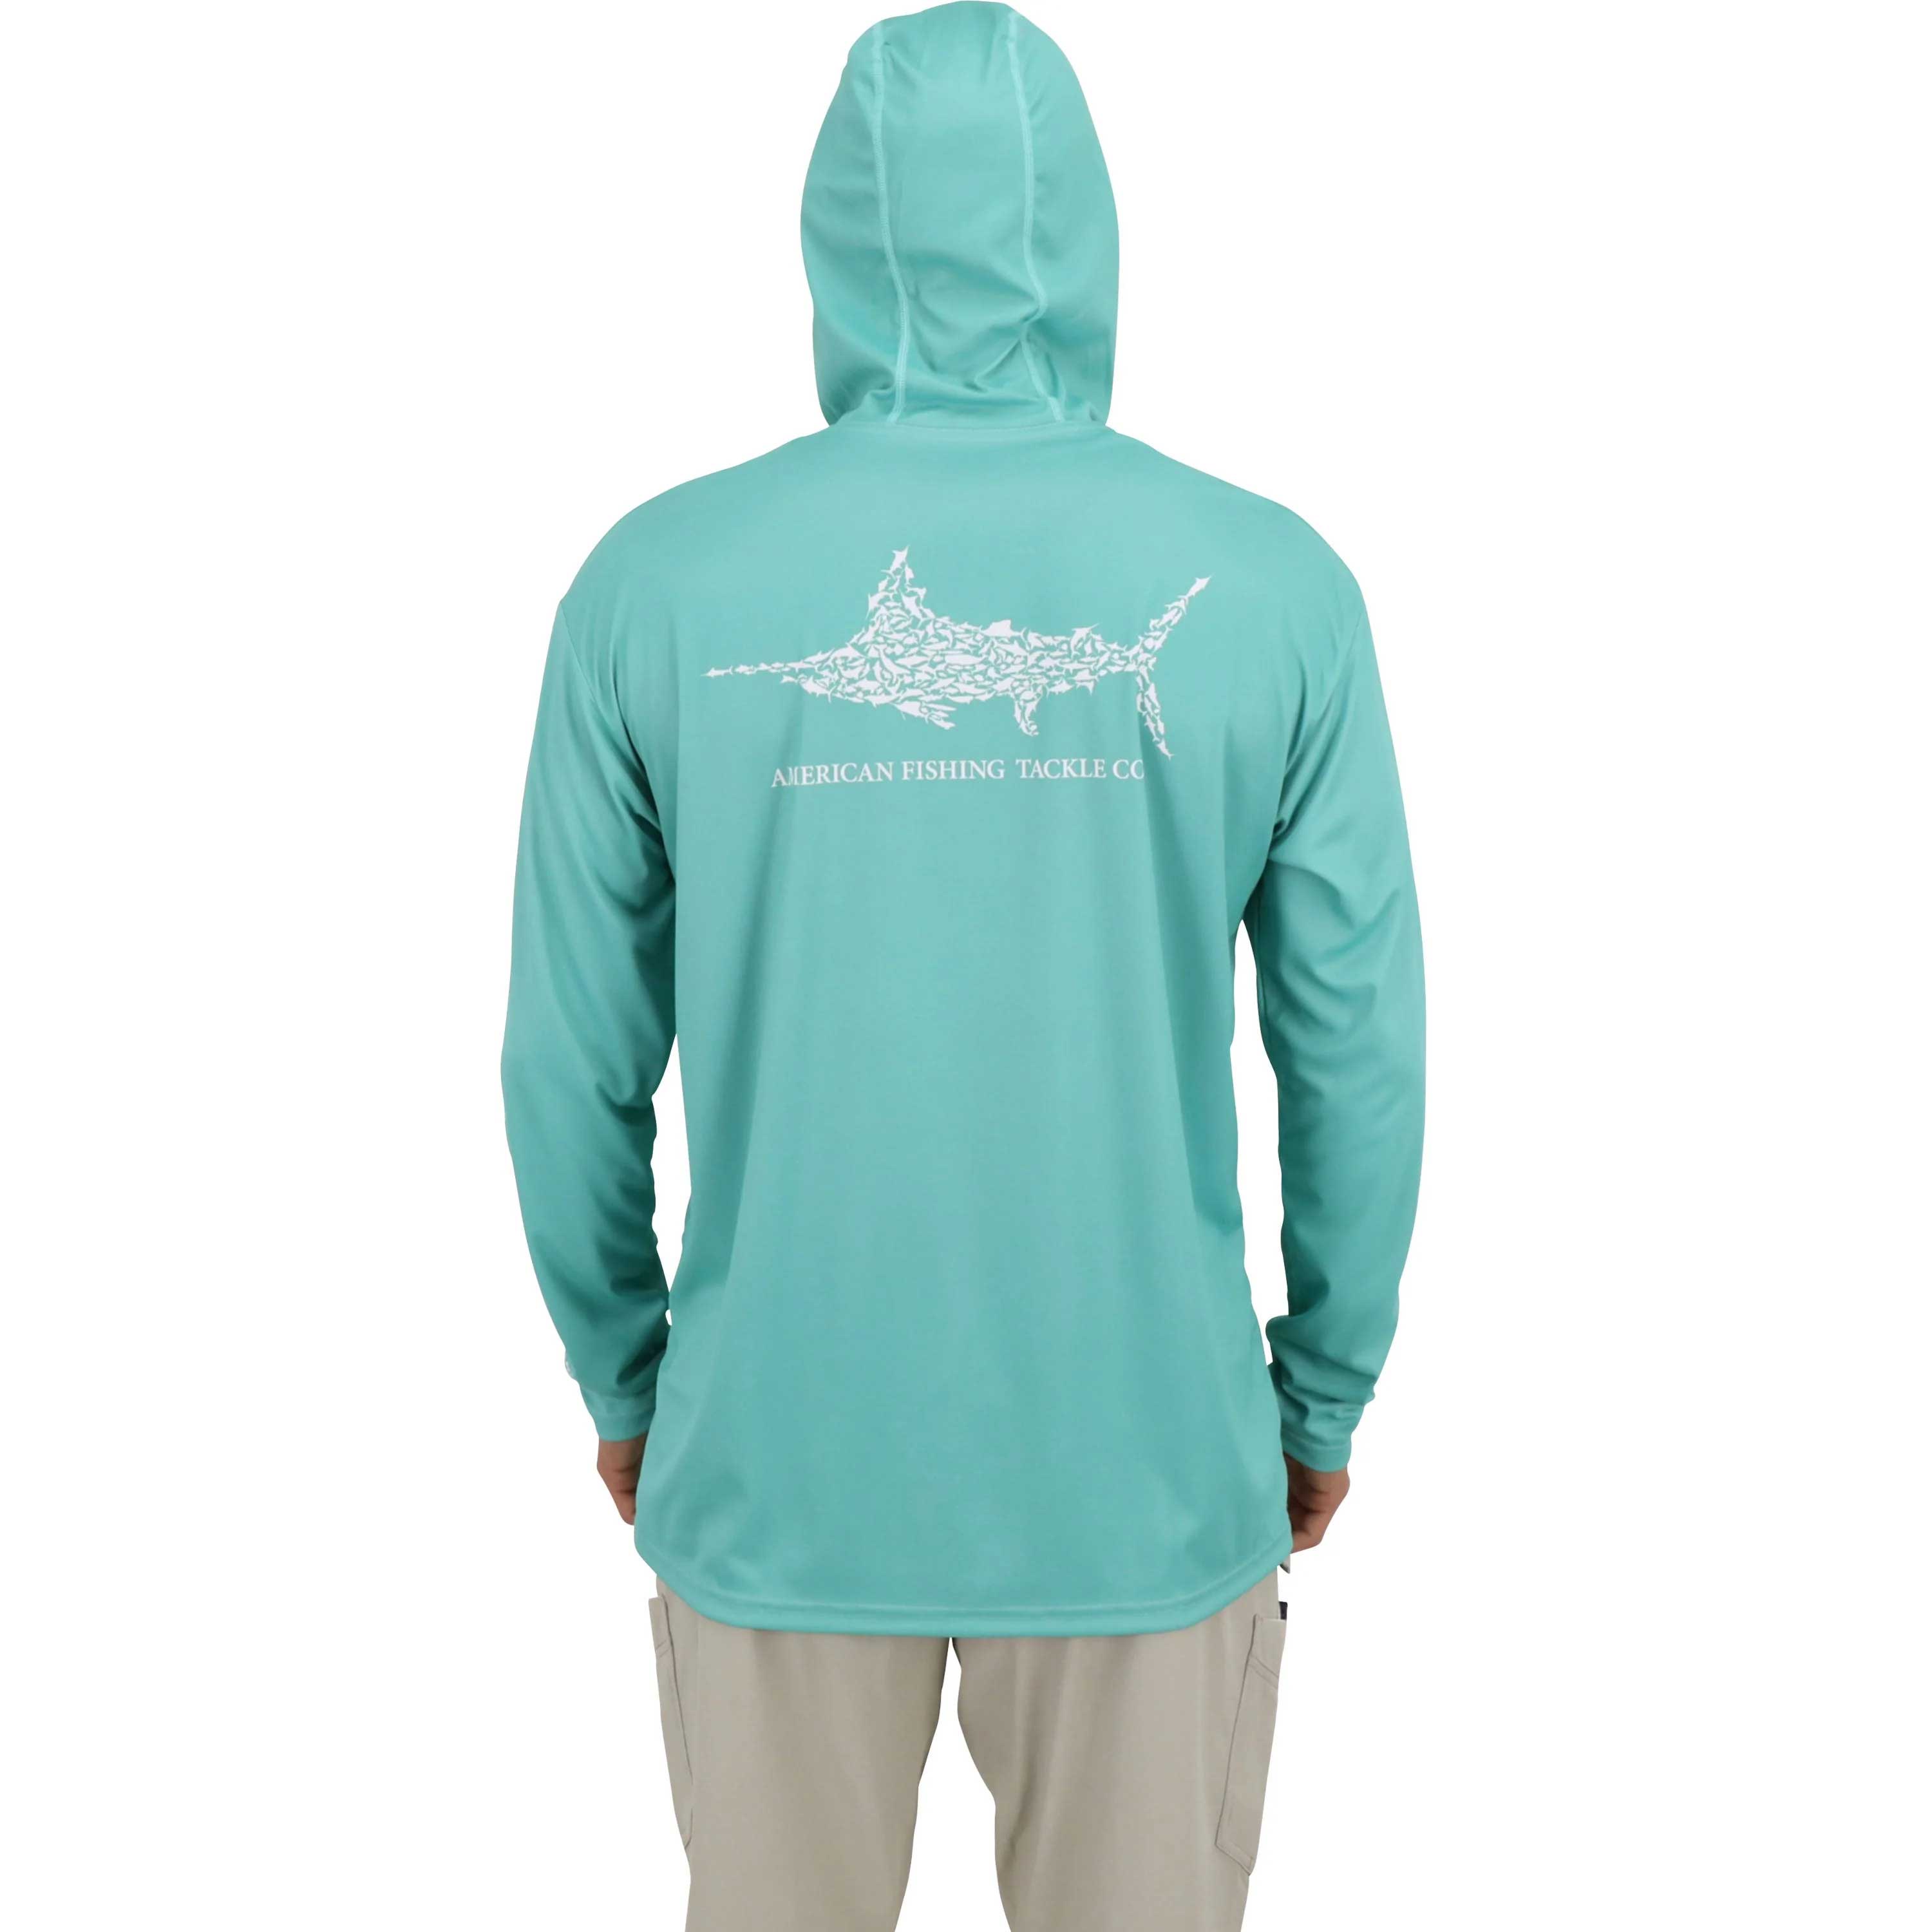 Performance fishing shirts - Aftco -Sun protecting shirts - Jigfish Hooded  -  Fishing Jigs